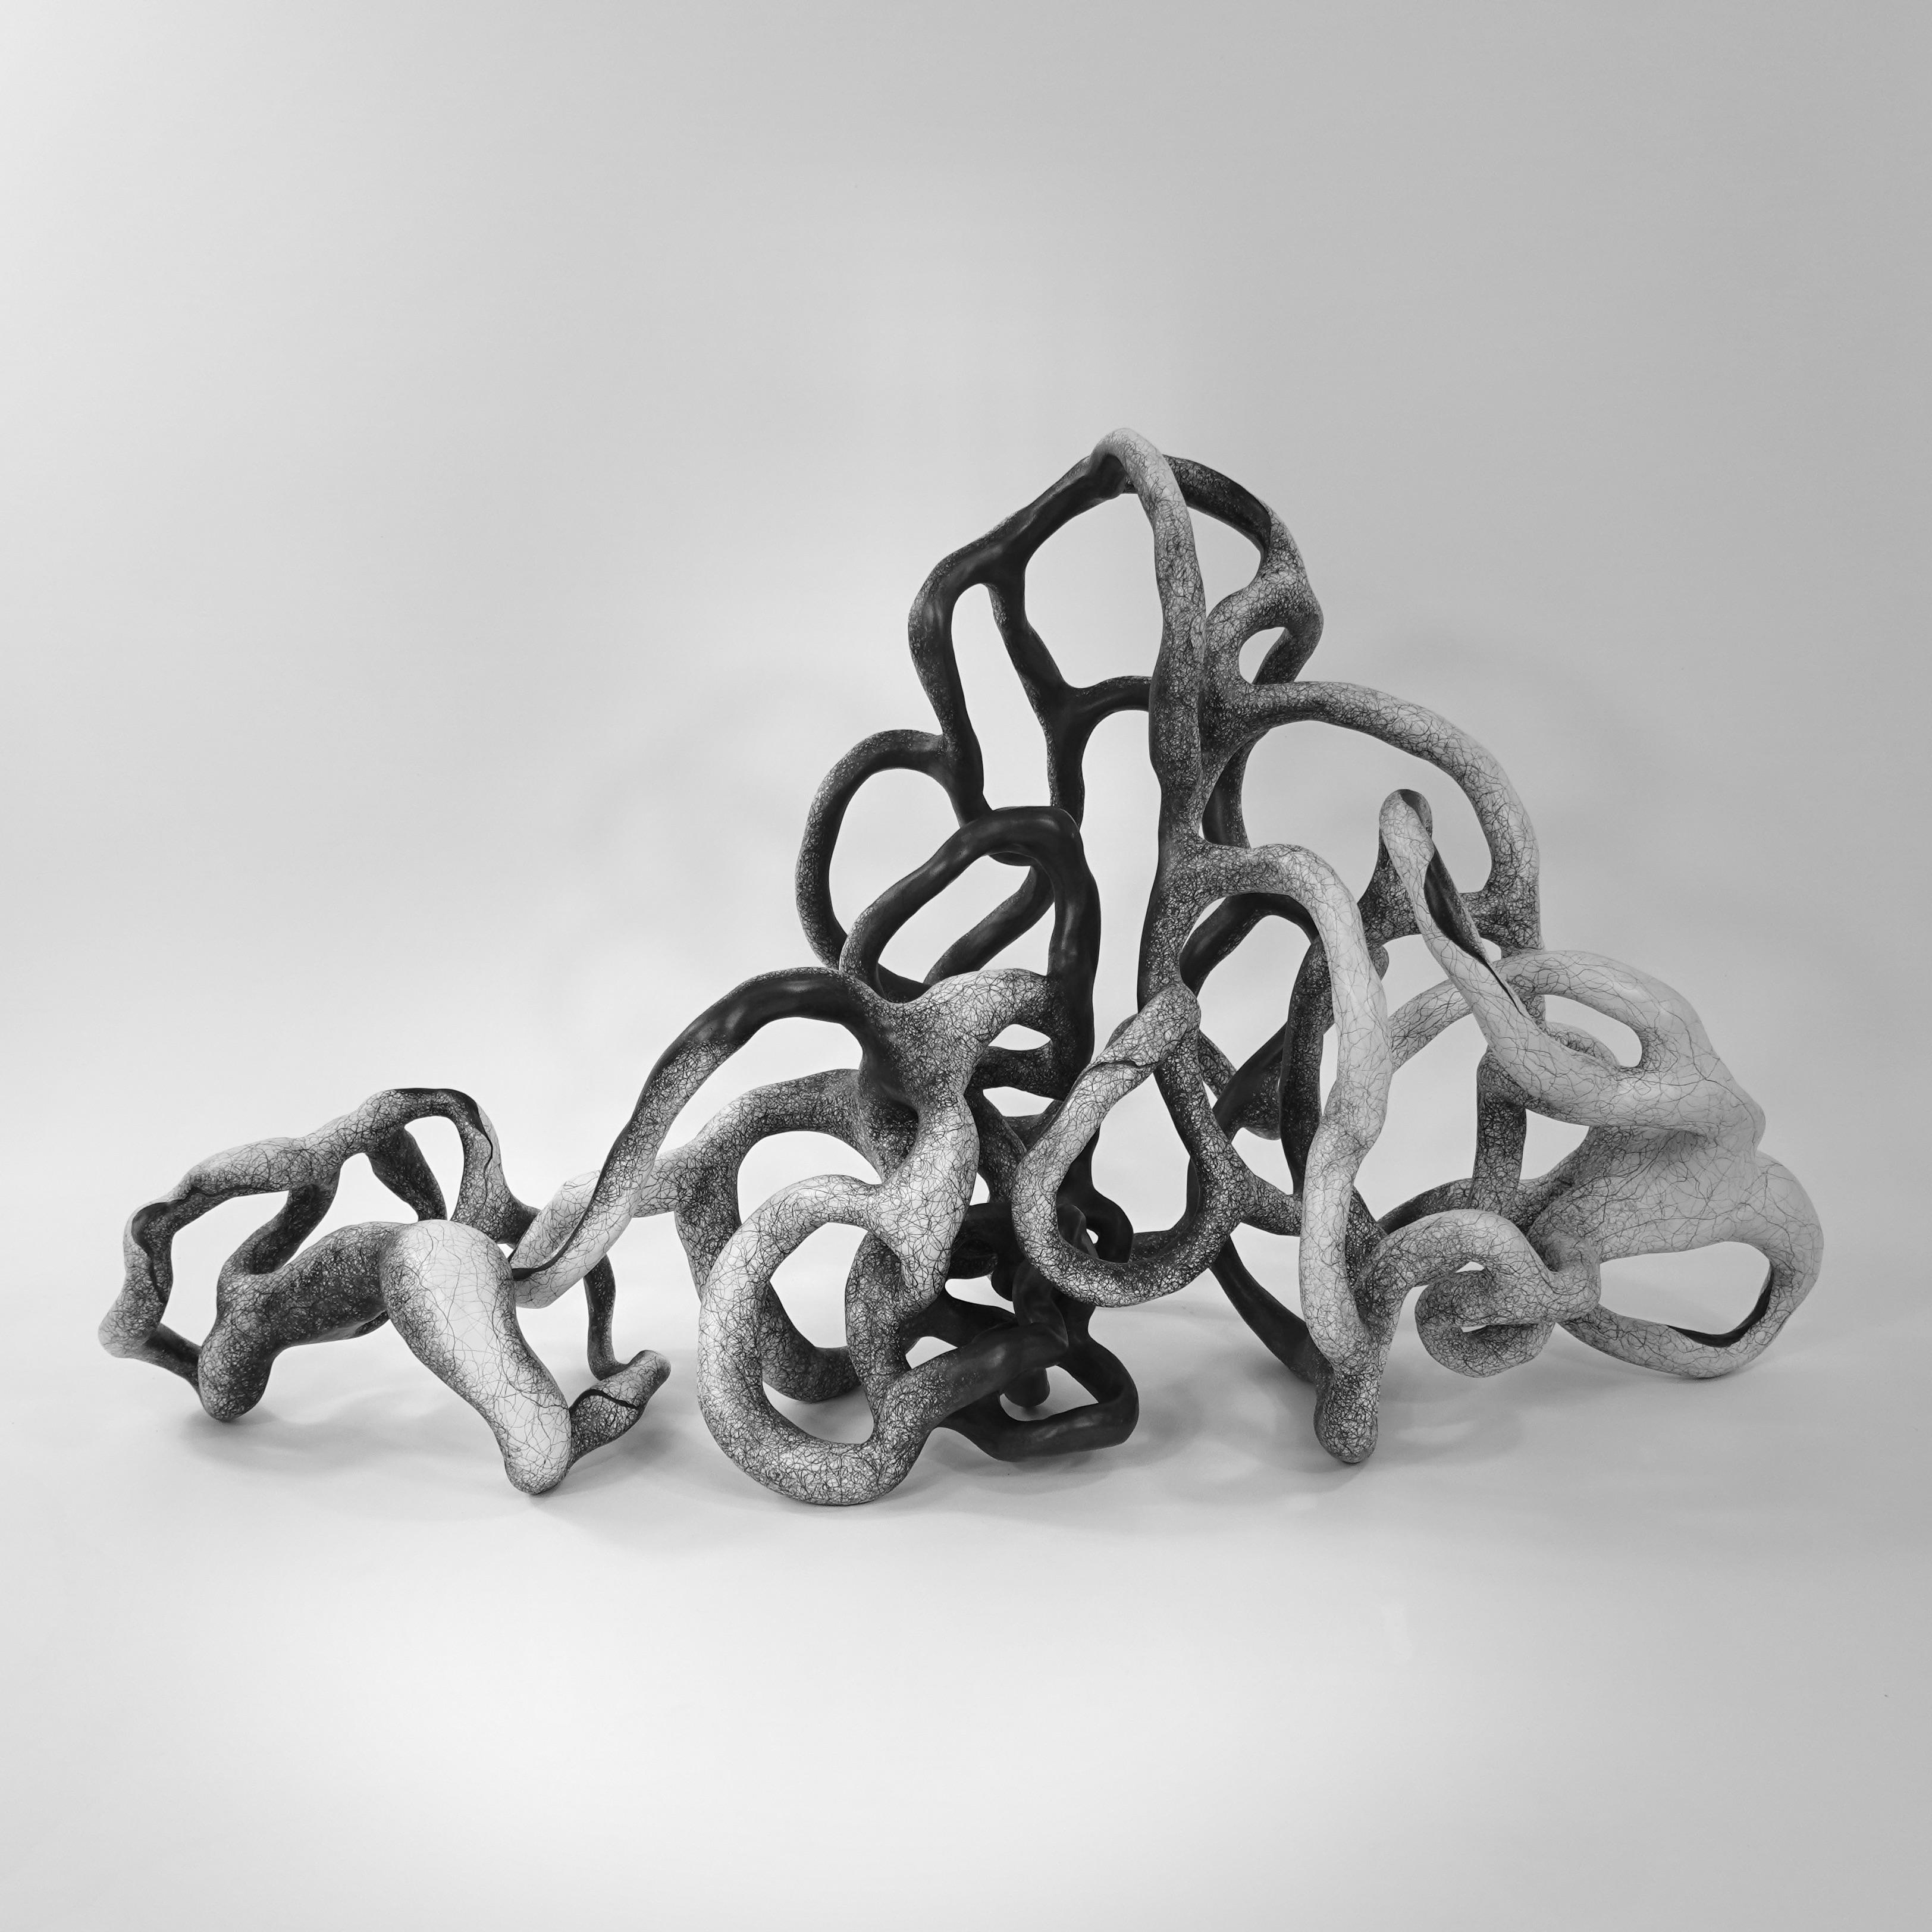 Abstract Sculpture Judi Tavill - Sculpture abstraite minimale en noir et blanc : "SPRAWL".